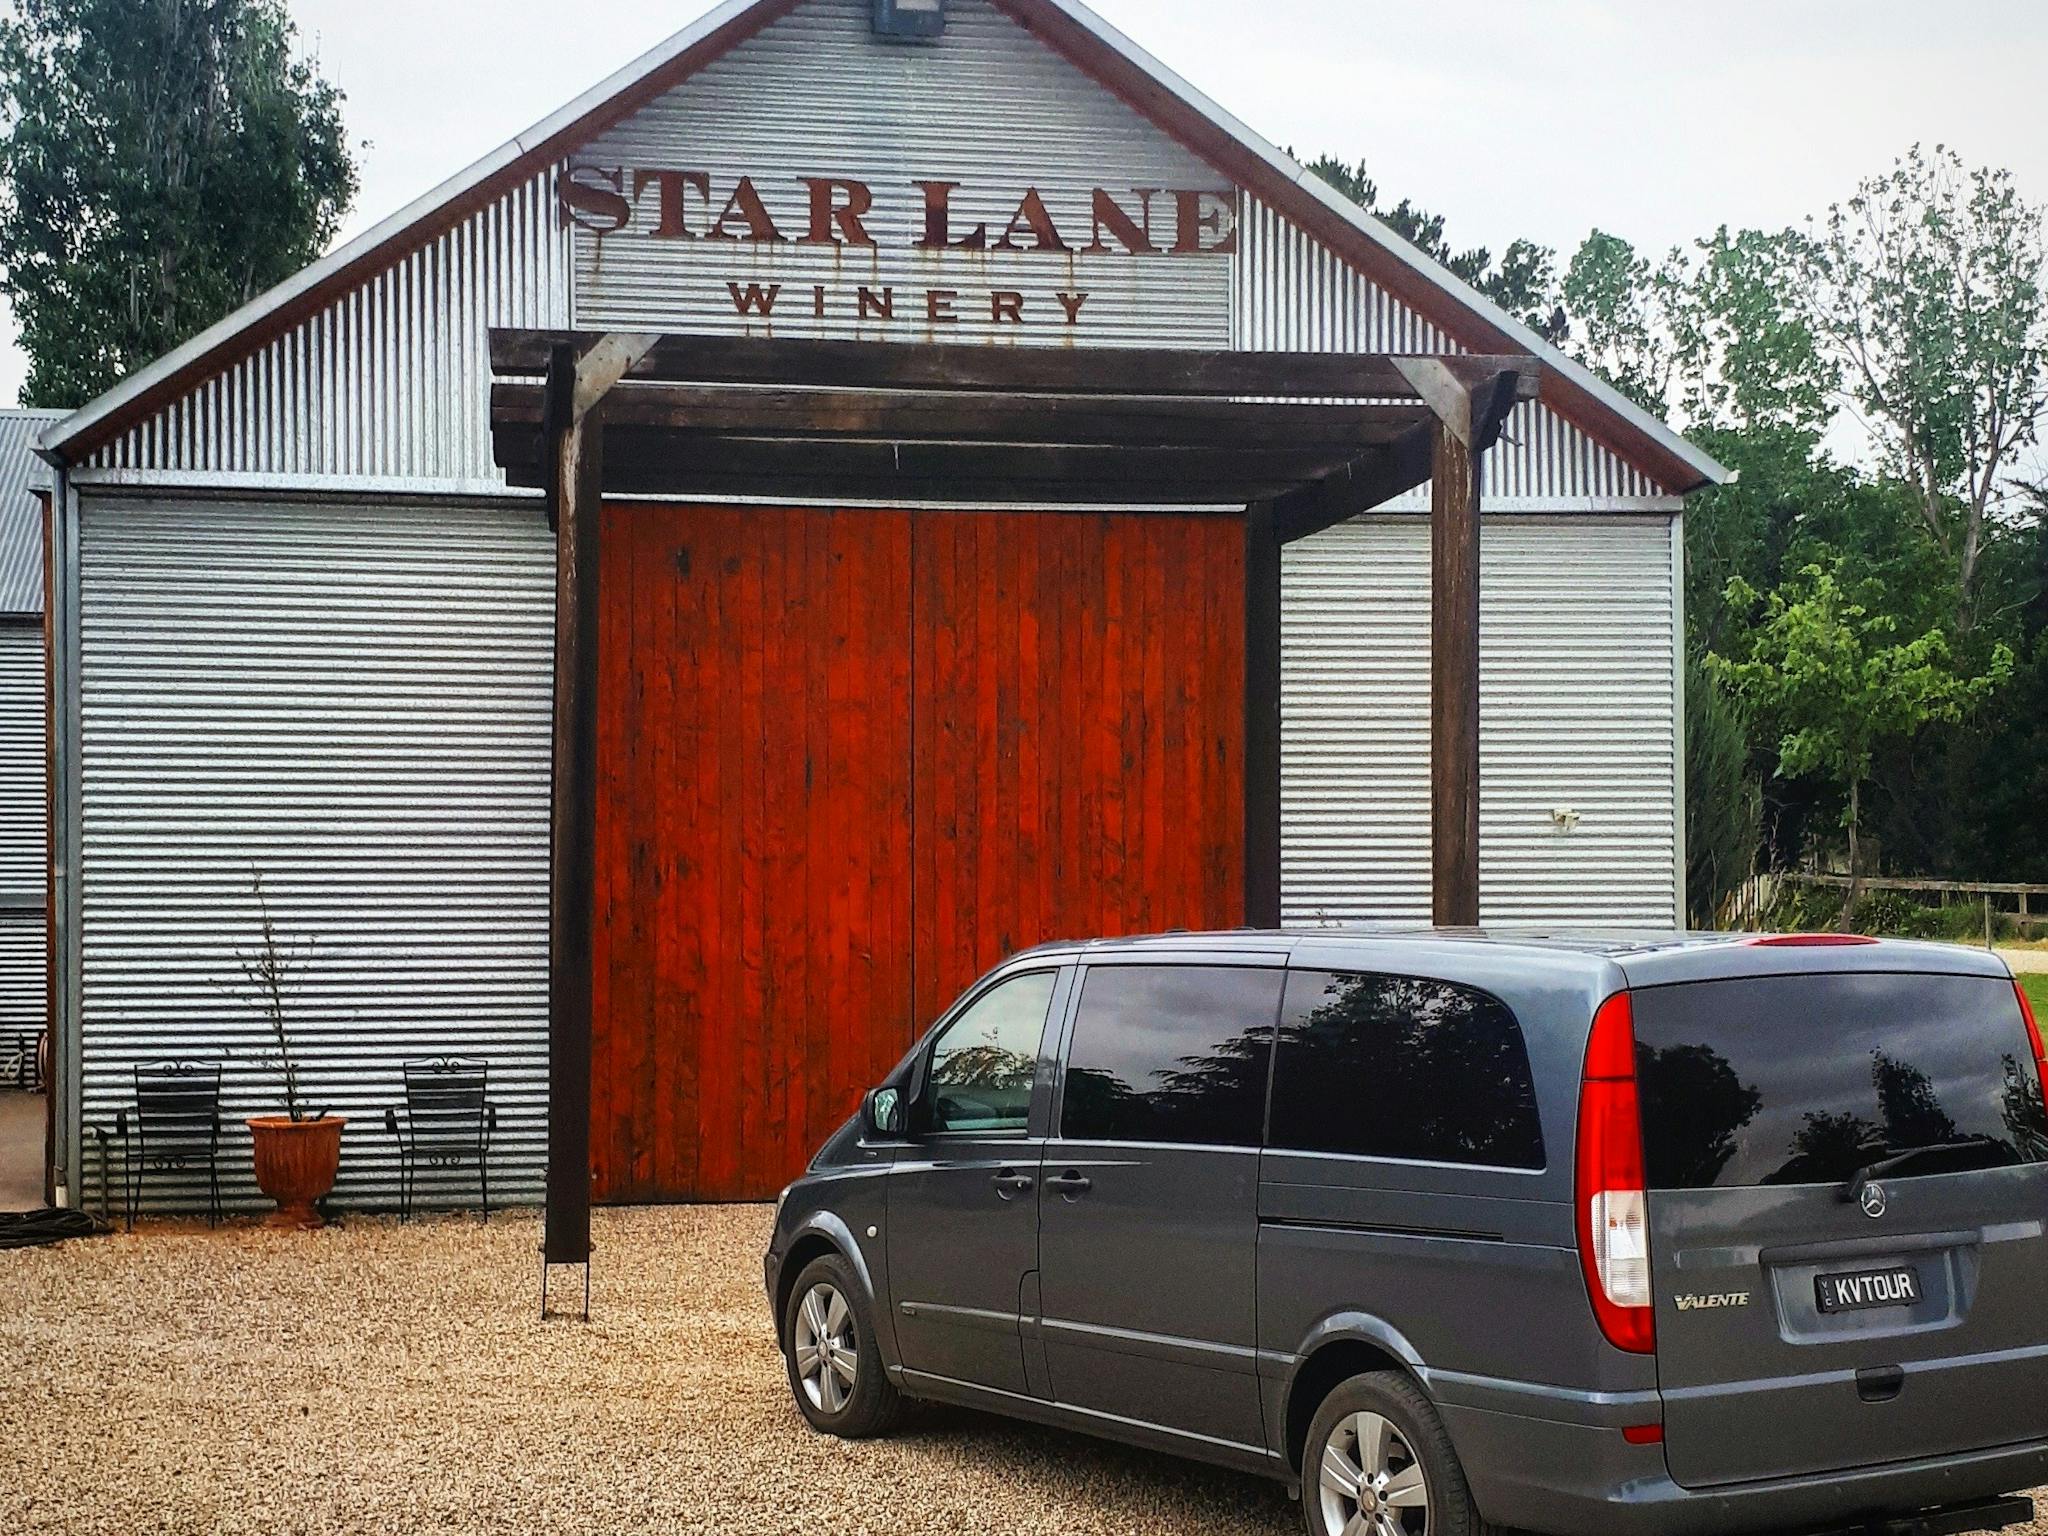 Star Lane hidden winery